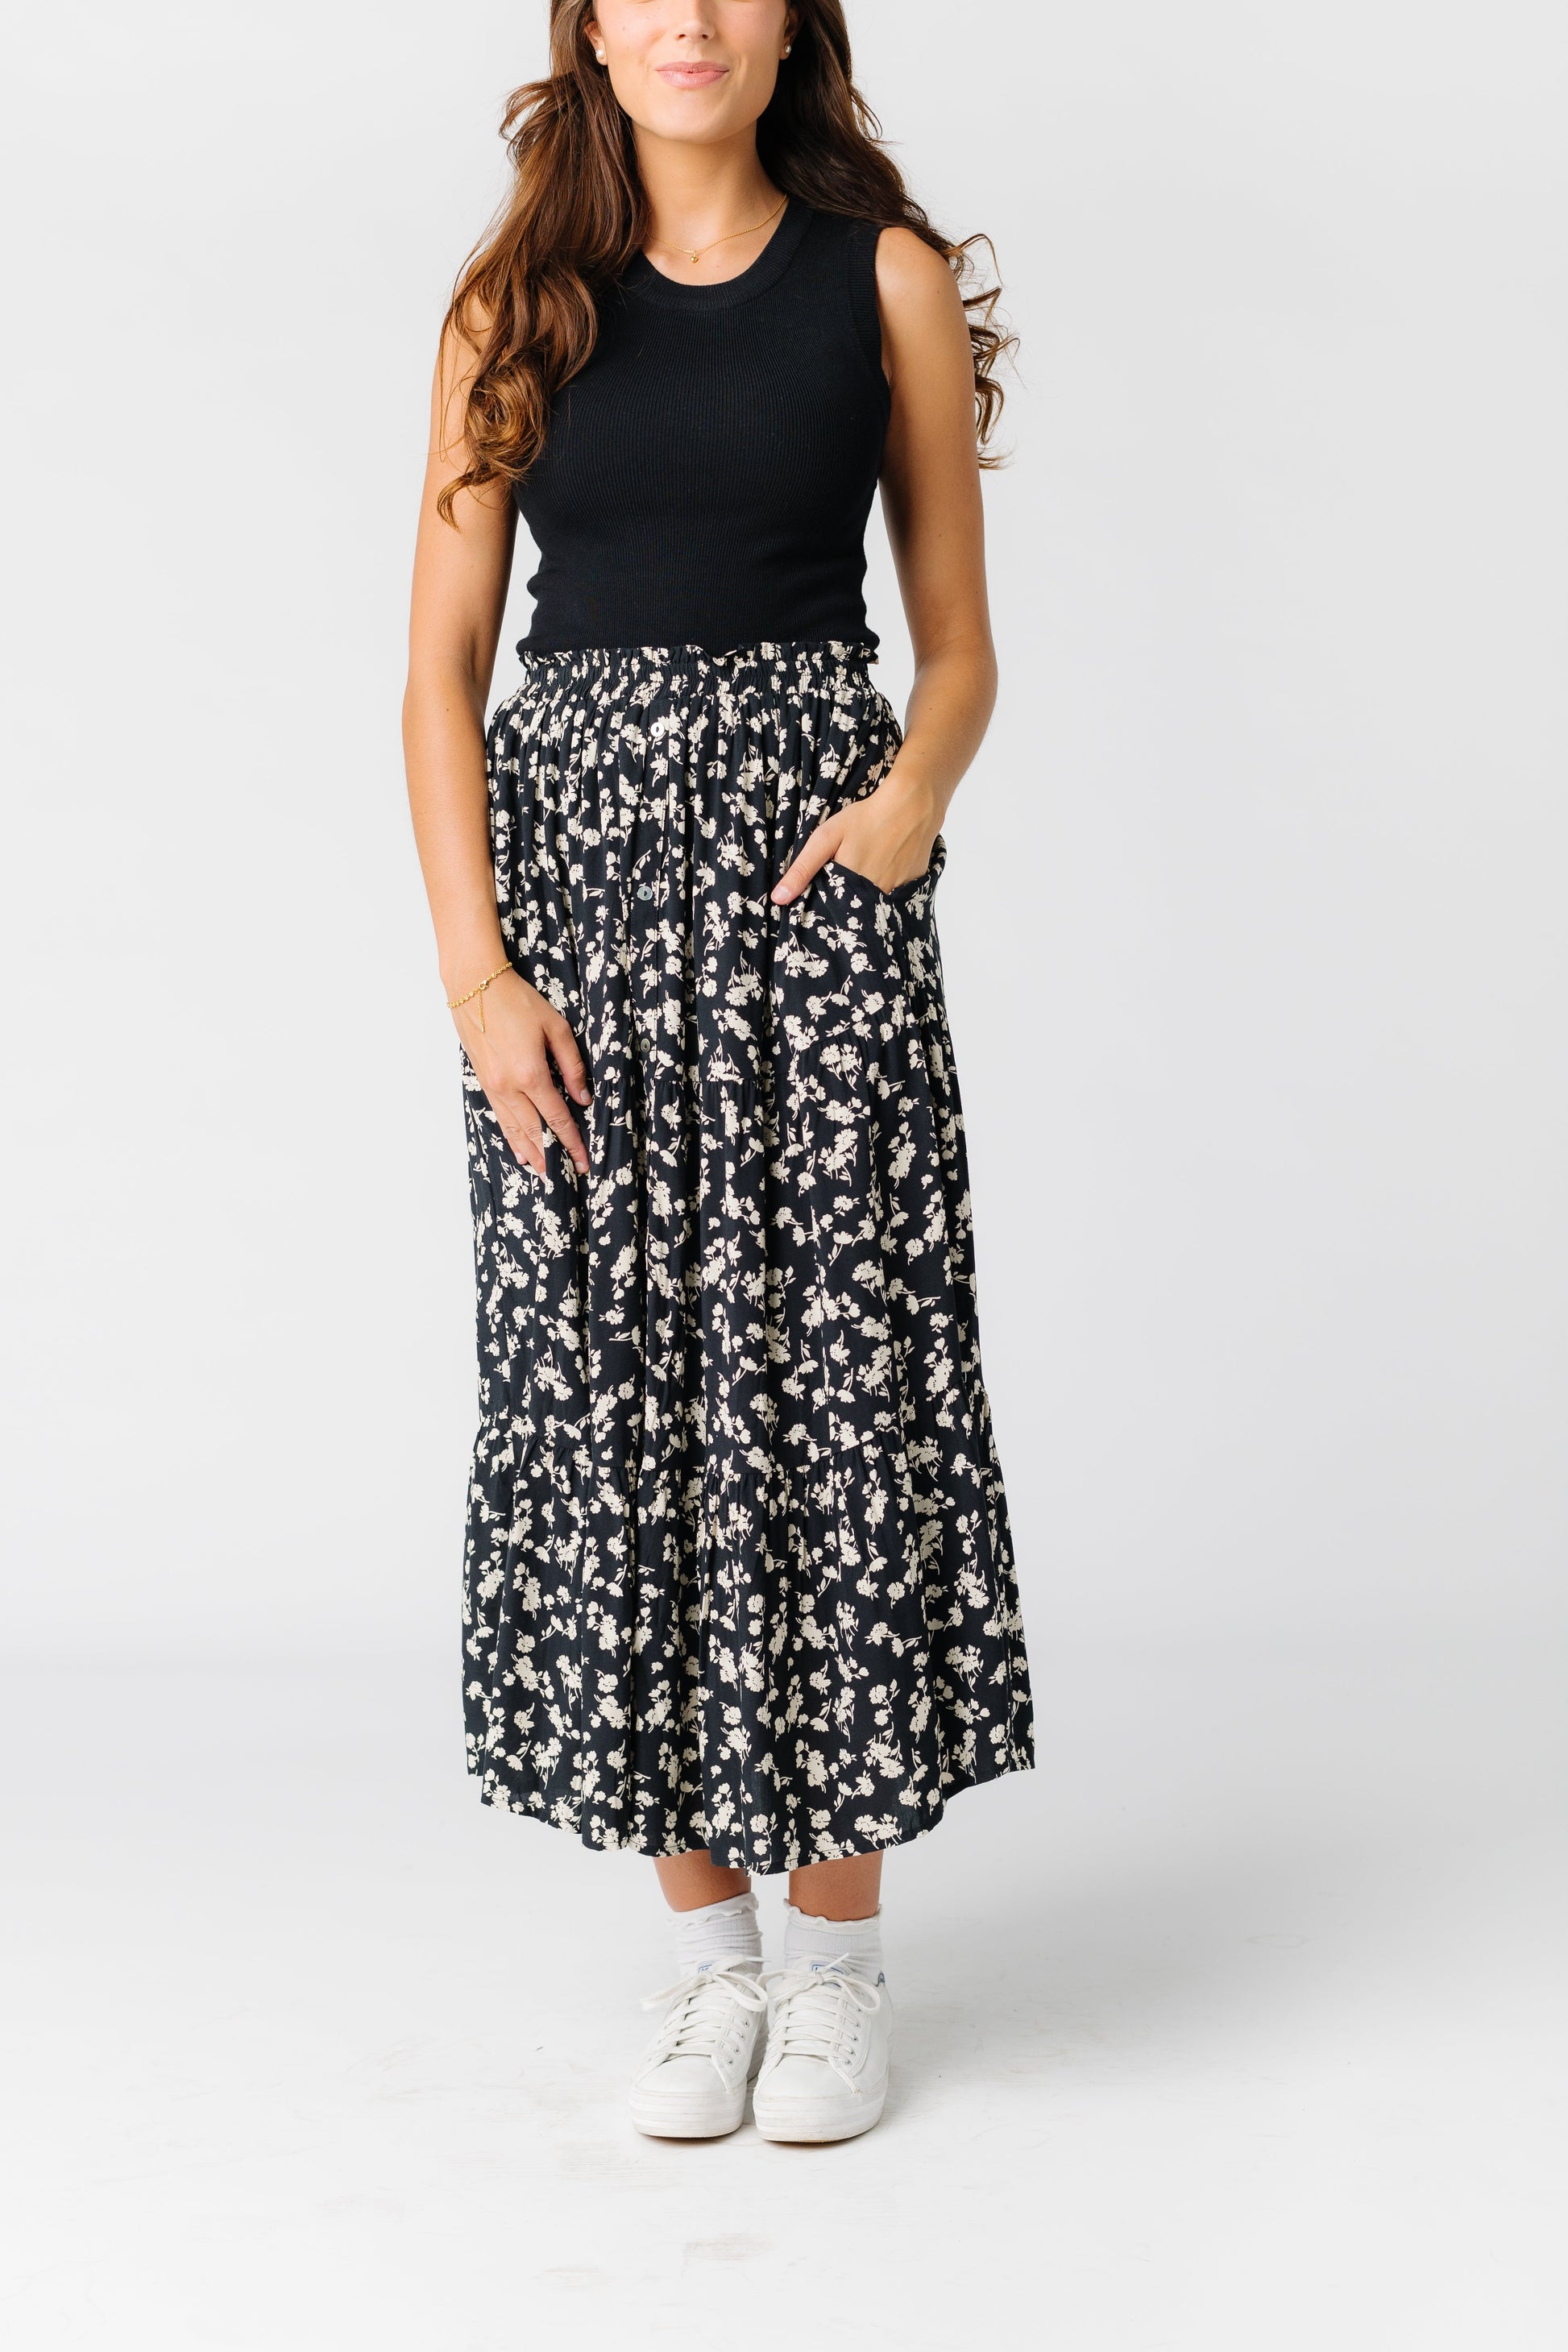 Floral Tiered Maxi Skirt WOMEN'S SKIRTS Polagram Black Multi L 